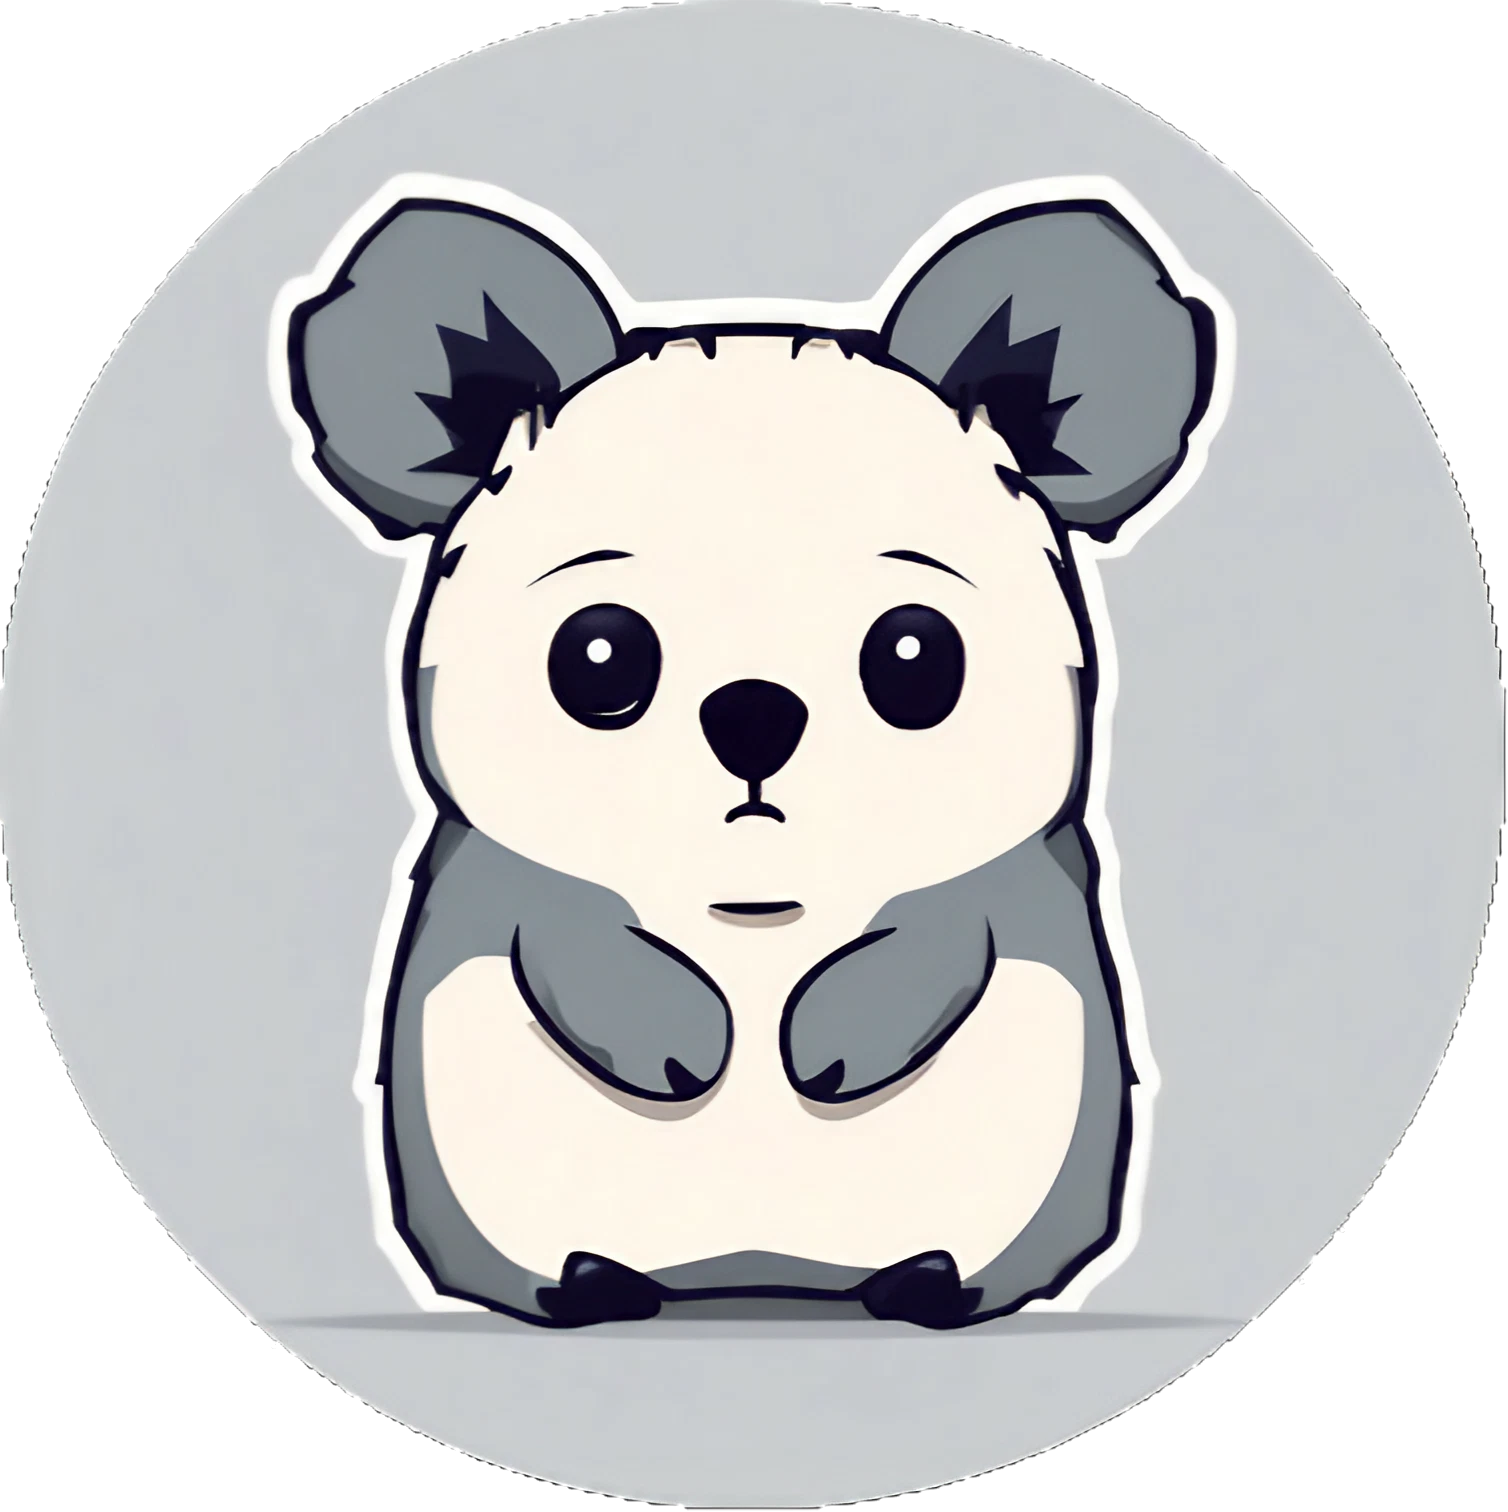 Trauriger Kawaii Koalabär - Sticker - 3x3cm